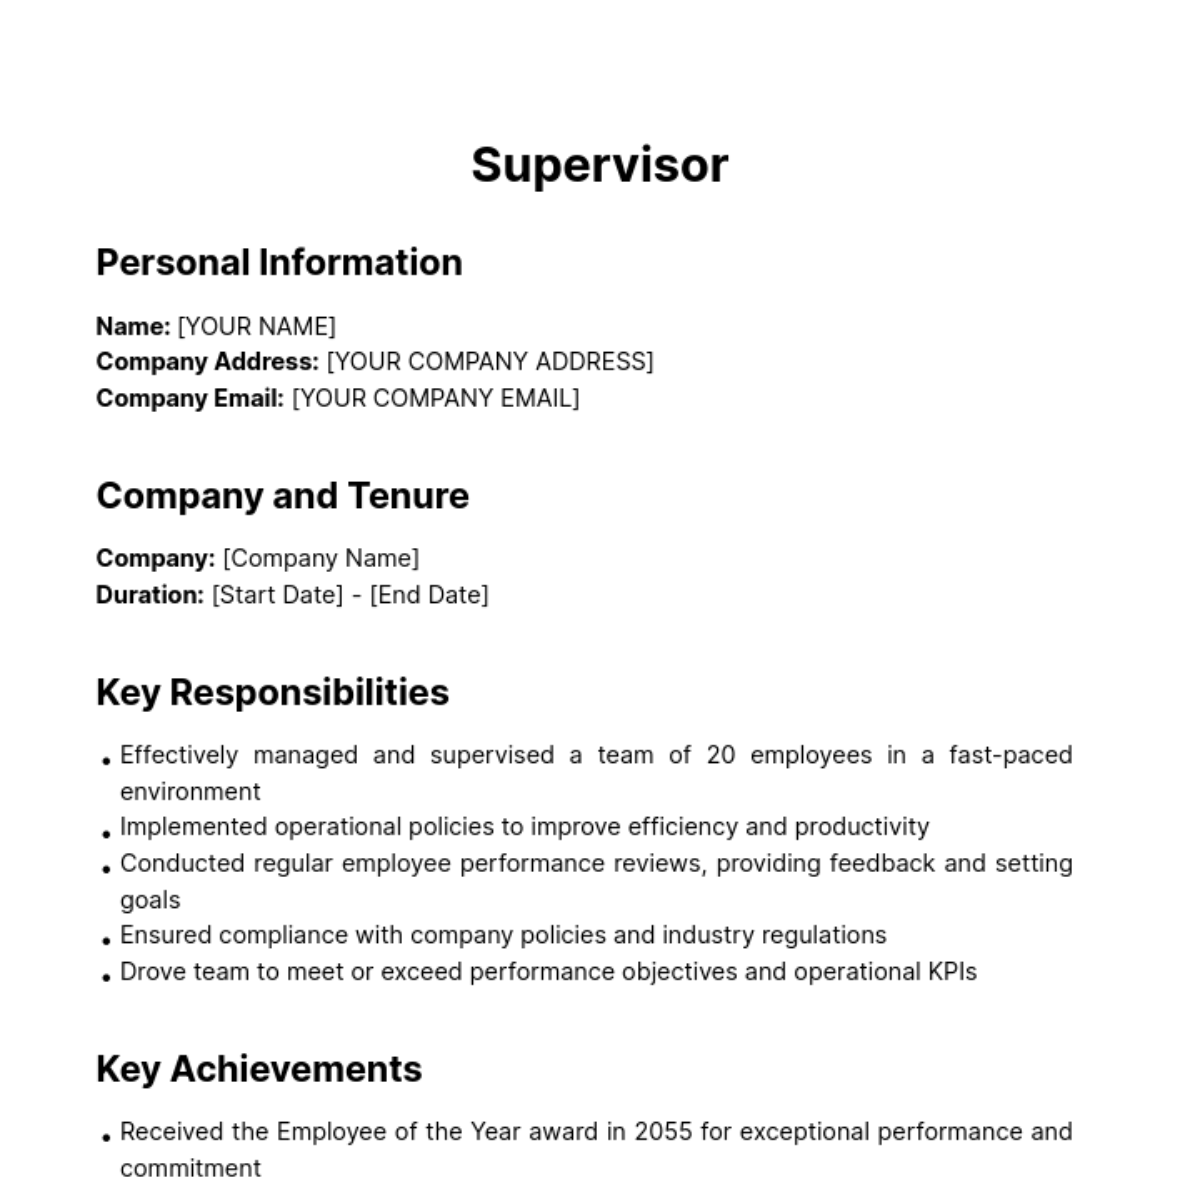 Supervisor Job Description for Resume Template